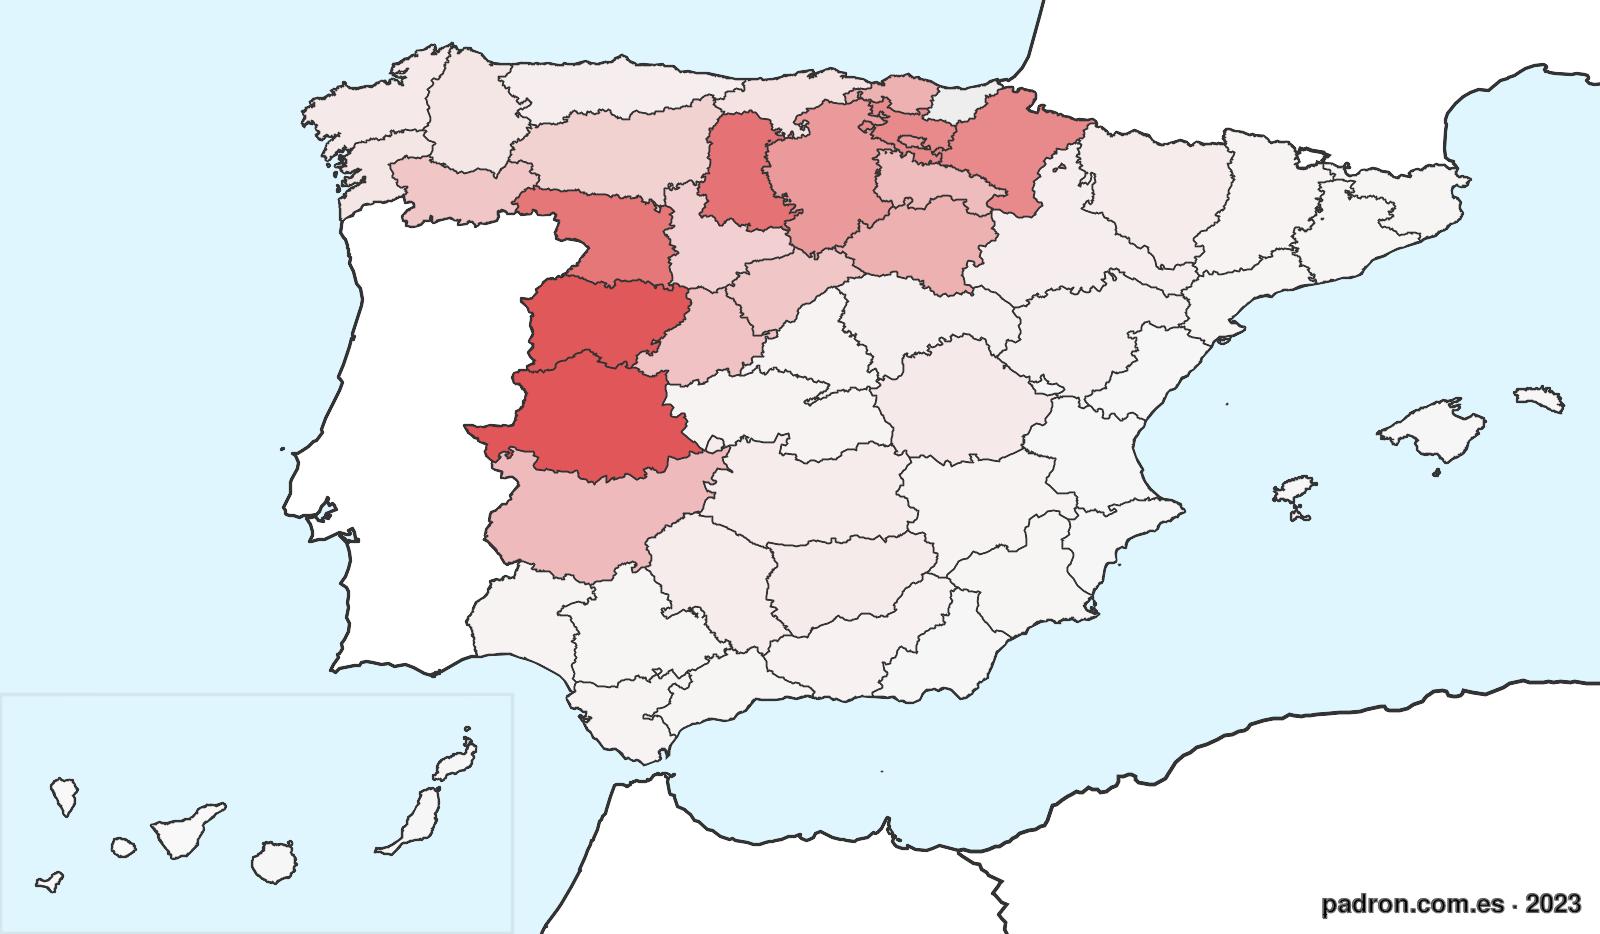 Porcentaje de población de otras provincias en Gipuzkoa